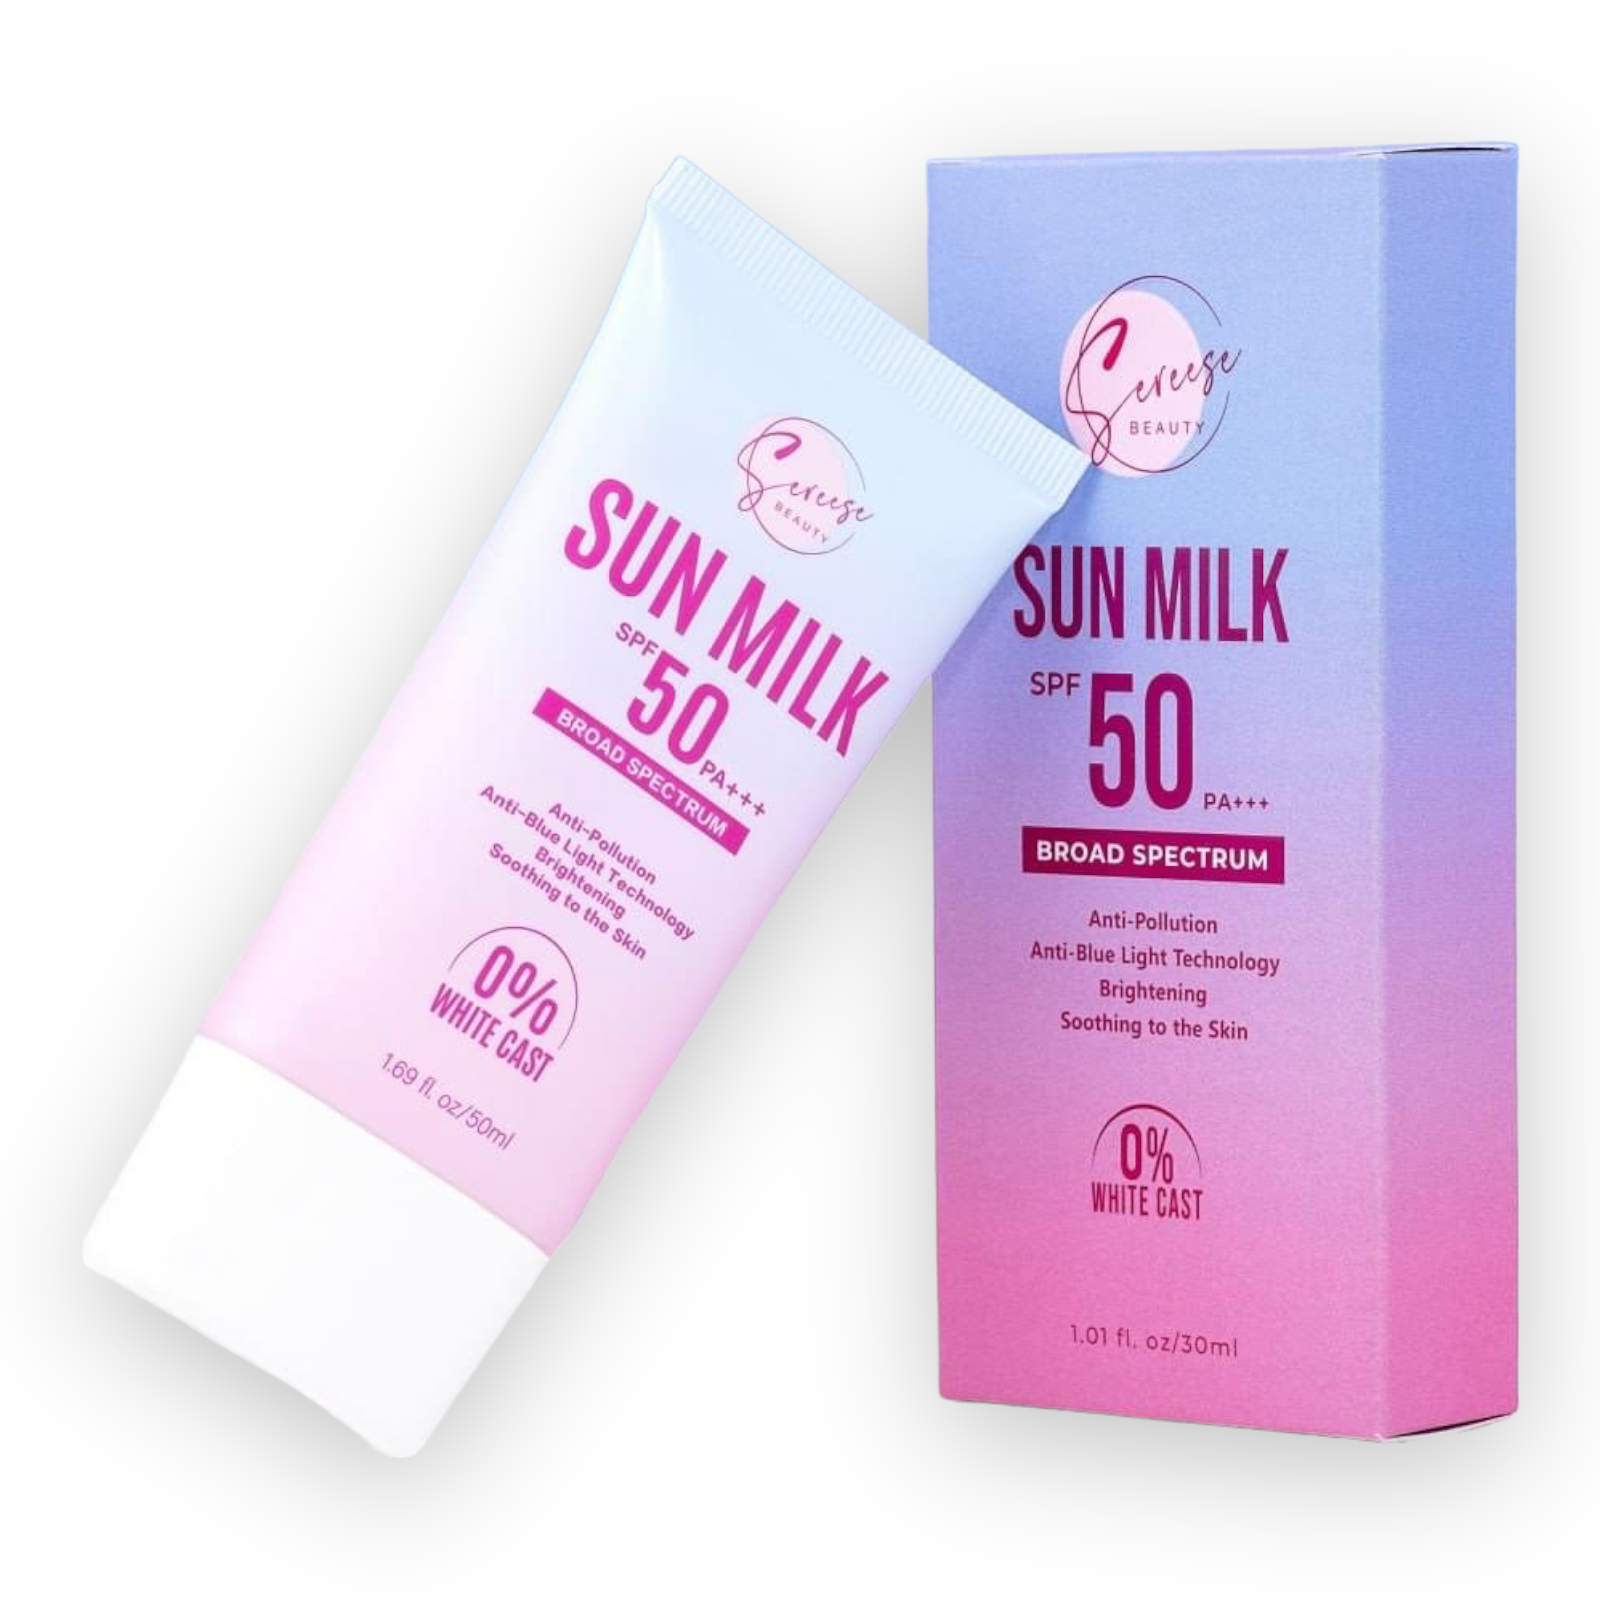 Sereese Beauty - Sun Milk SPF 50 - New Formula - New Packaging - 50ml